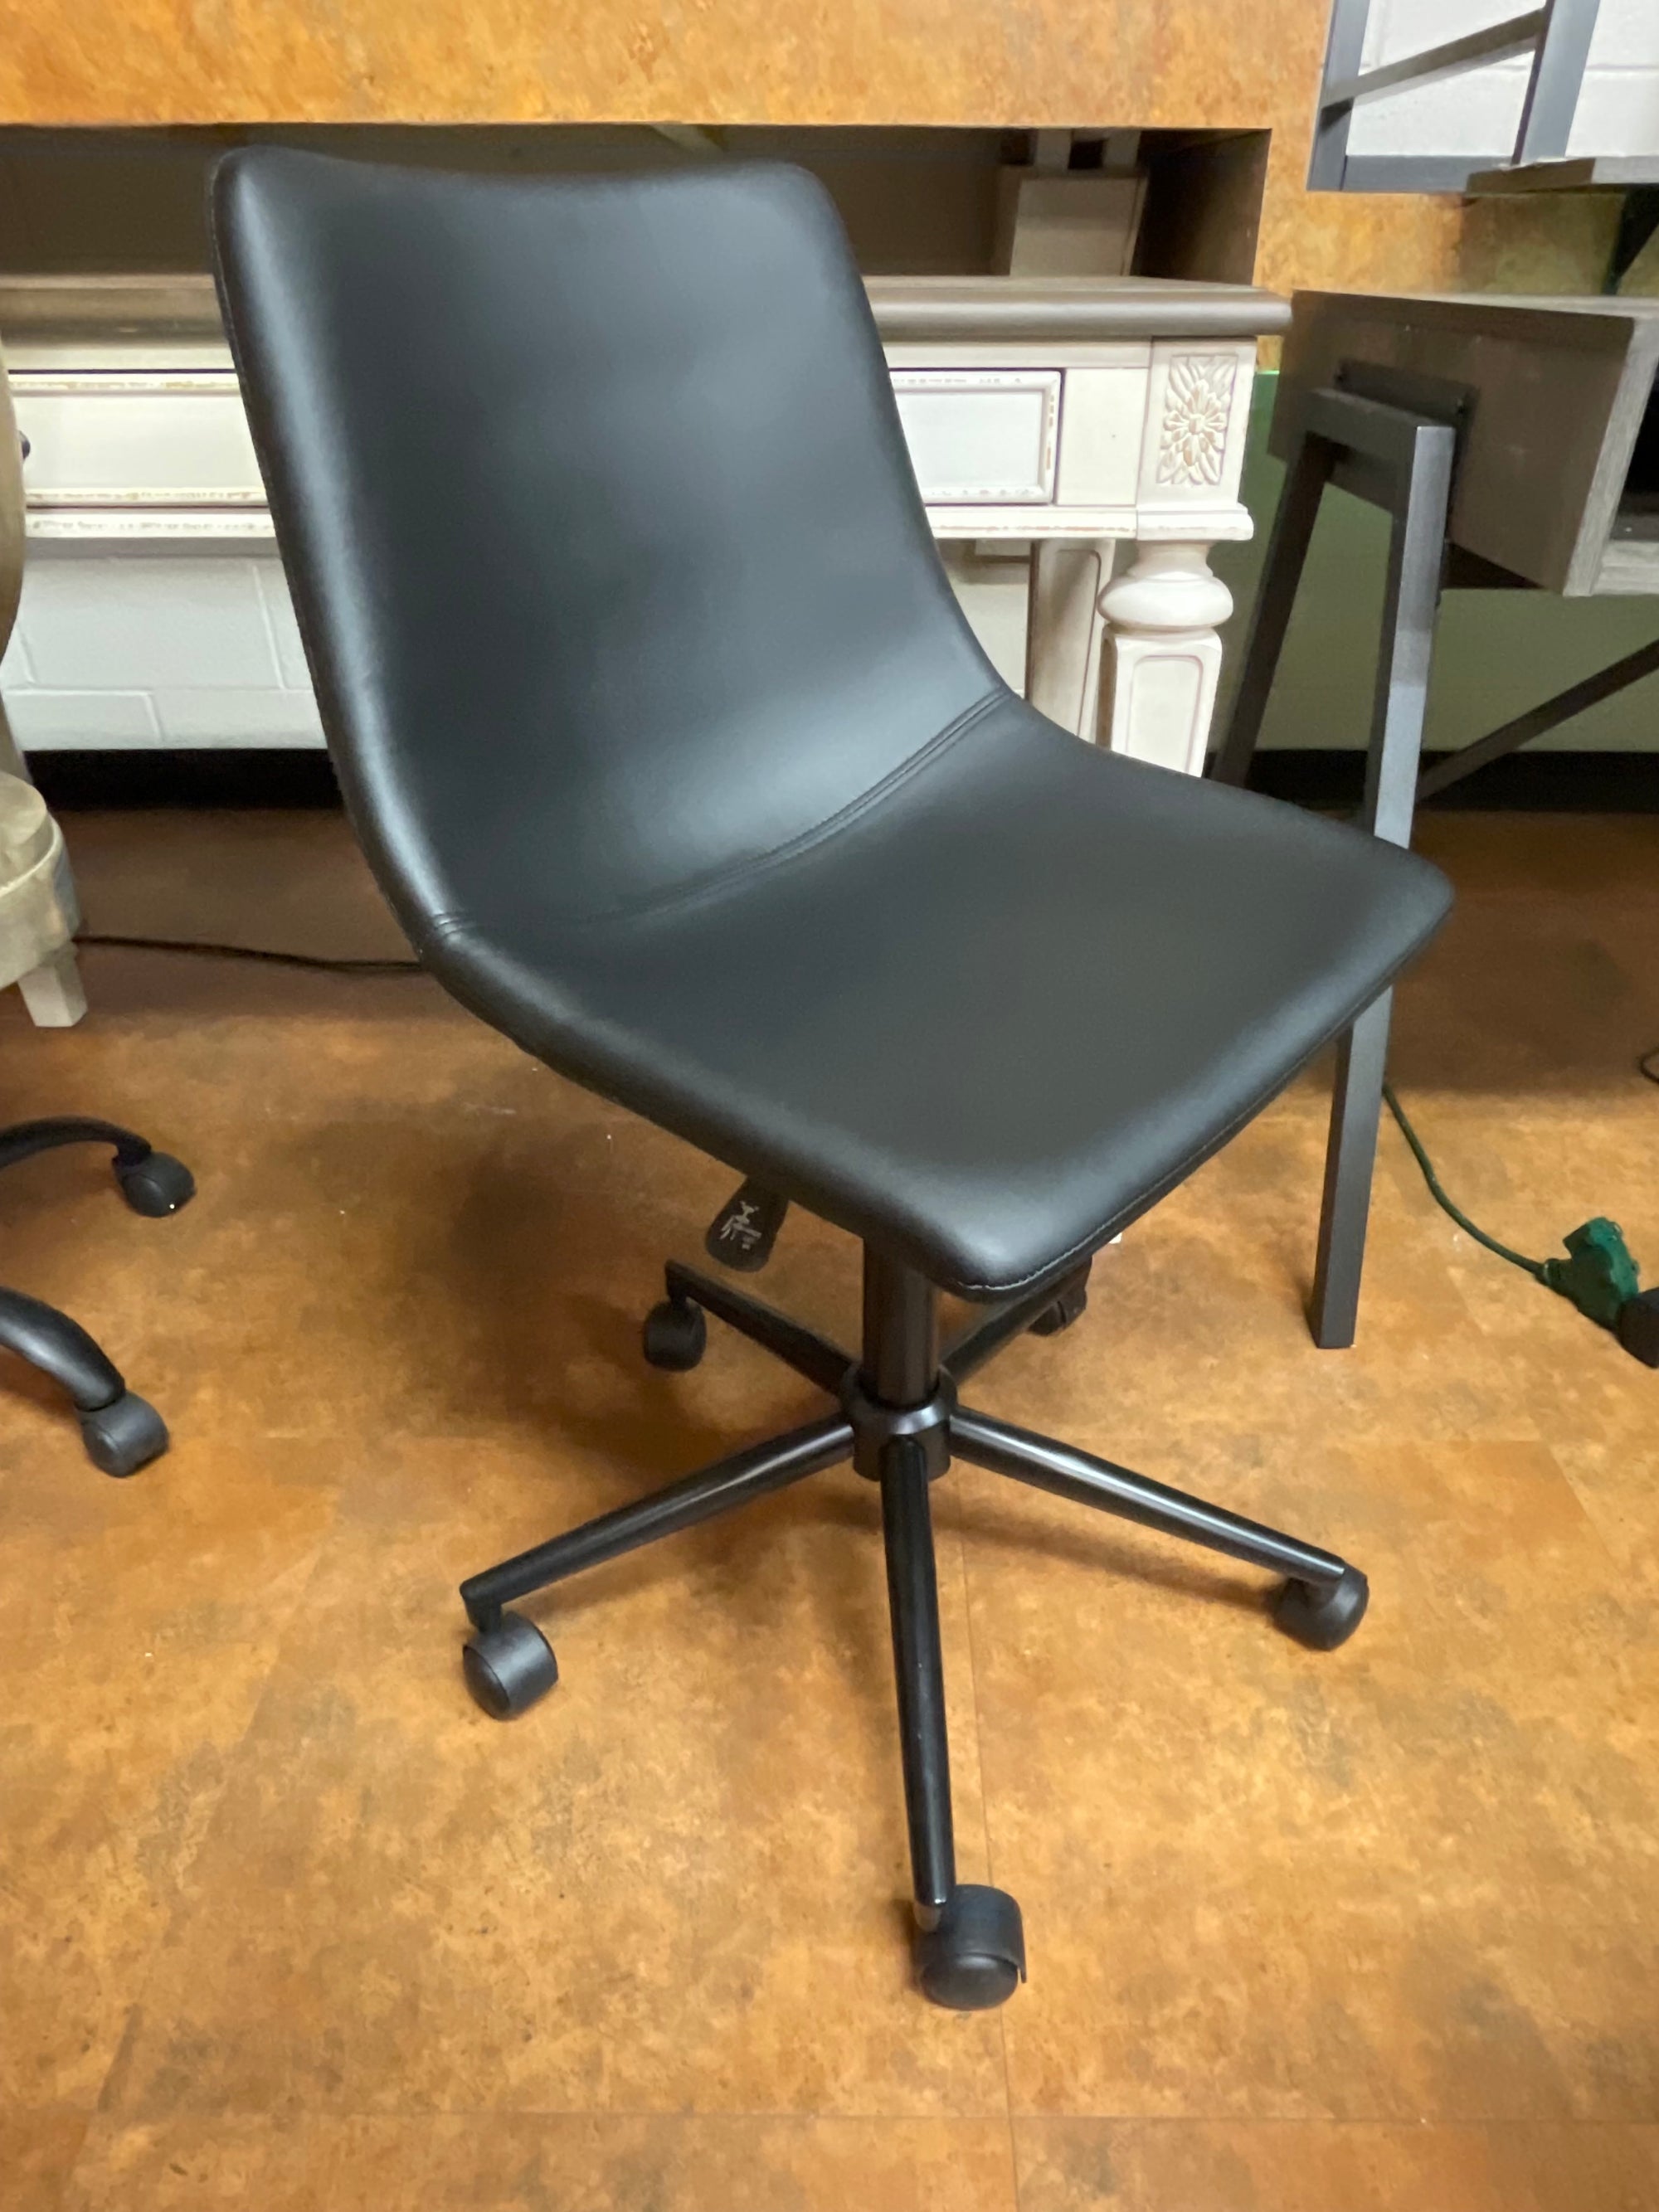 H311-12 FI-A Home Office Swivel Desk Chair